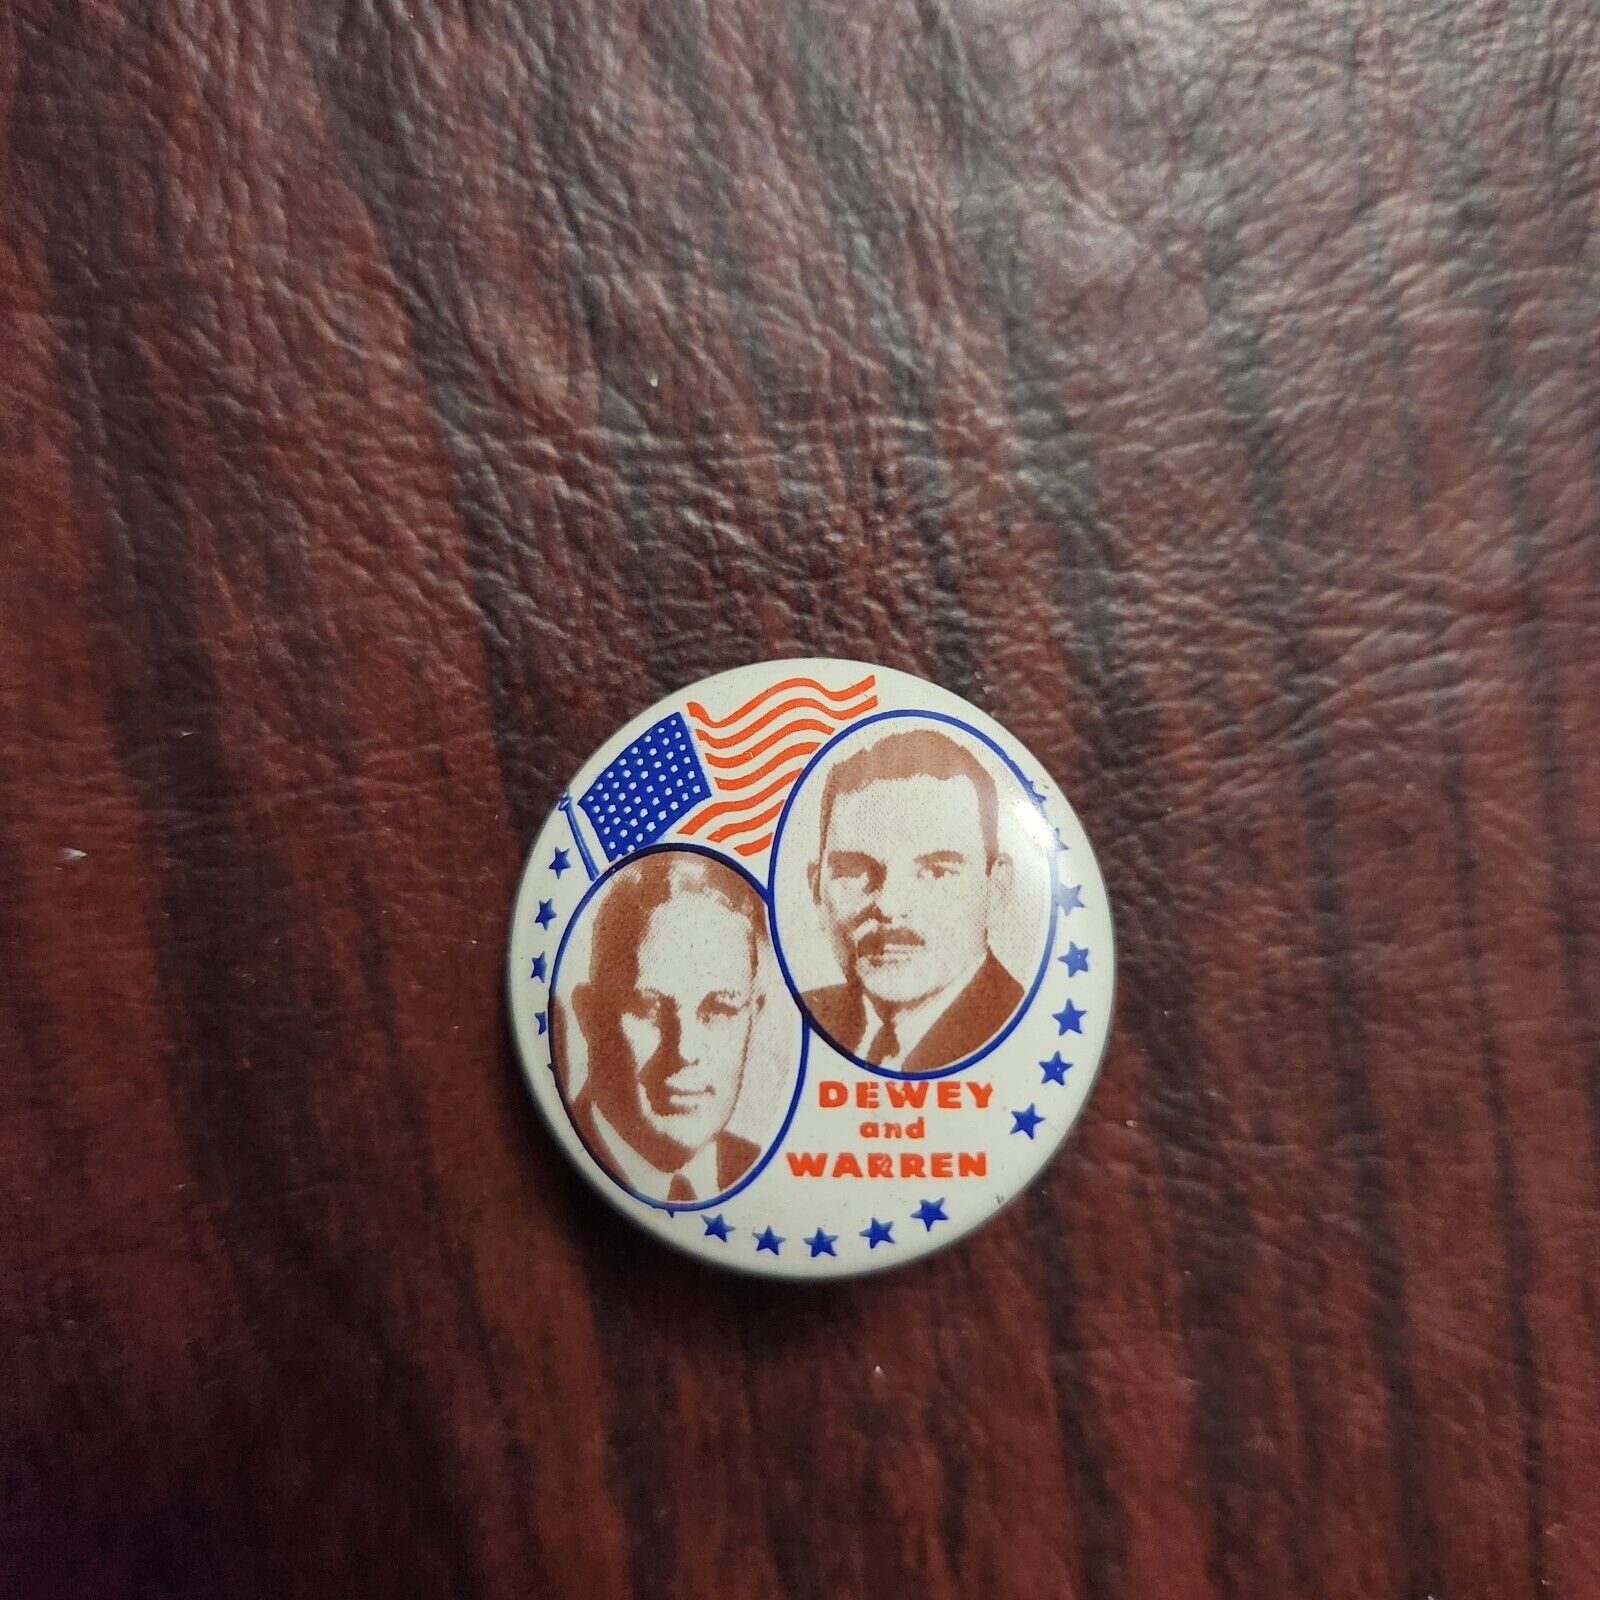 Thomas Dewey Warren 1948 campaign pin button political